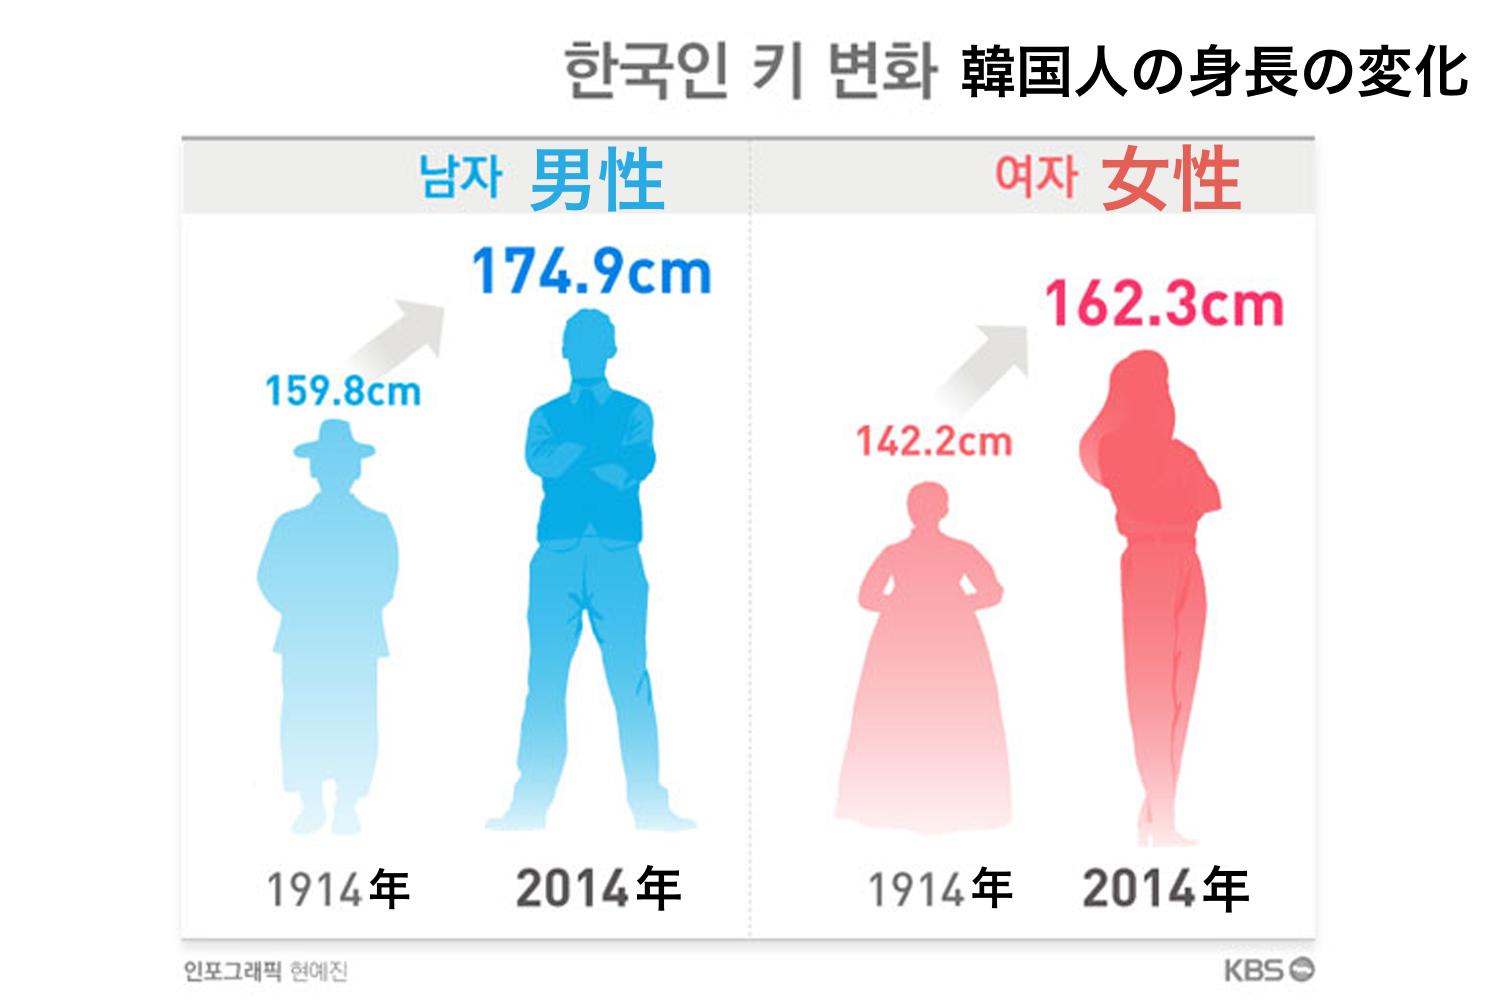 Creatrip 韓国人の身長について